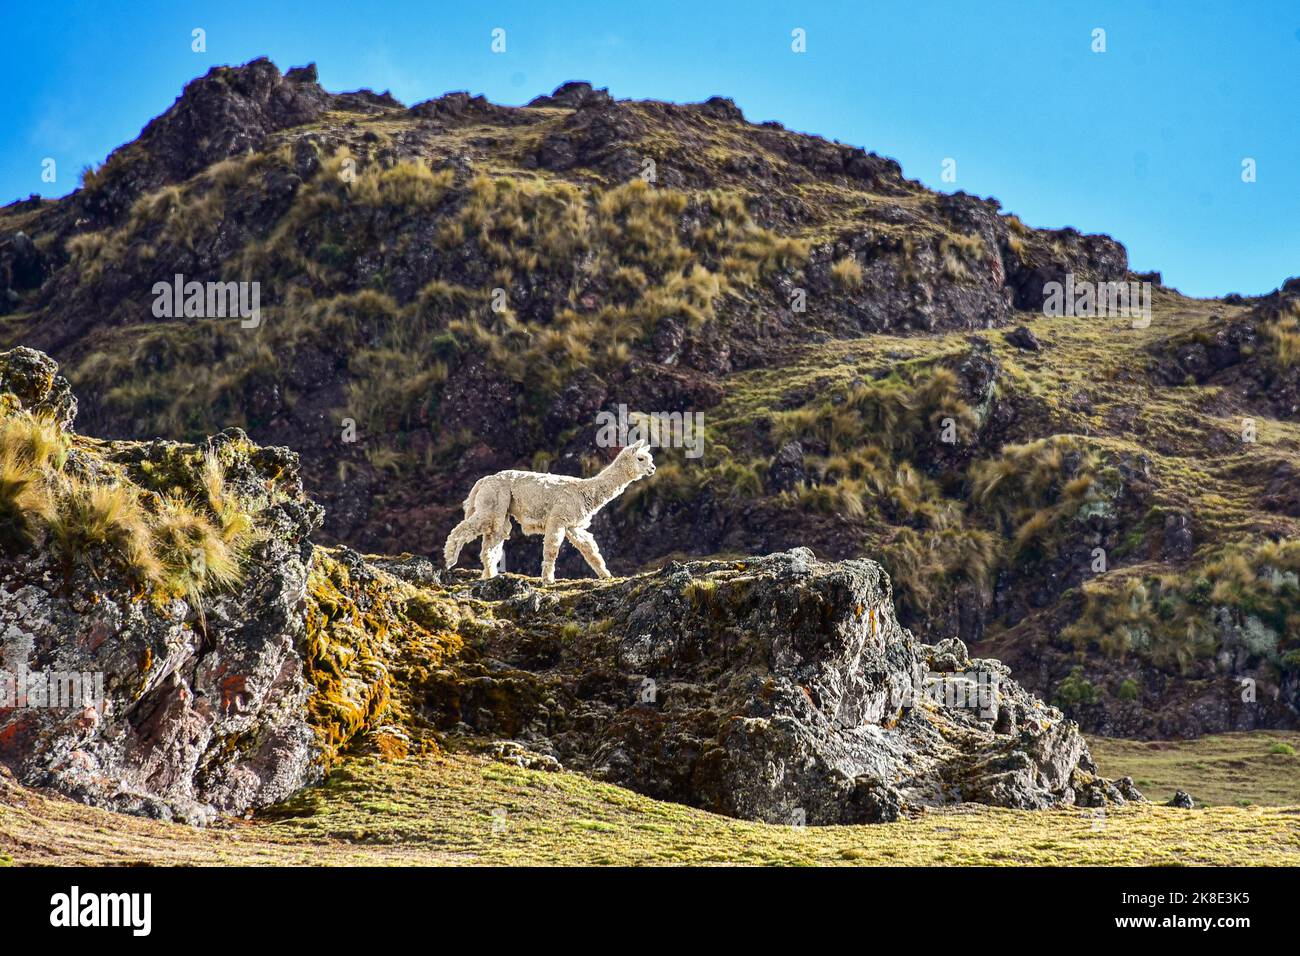 Alpaca (Vicugna pacos) on a rocky outcrop, Andes, near Cusco, Peru, South America Stock Photo